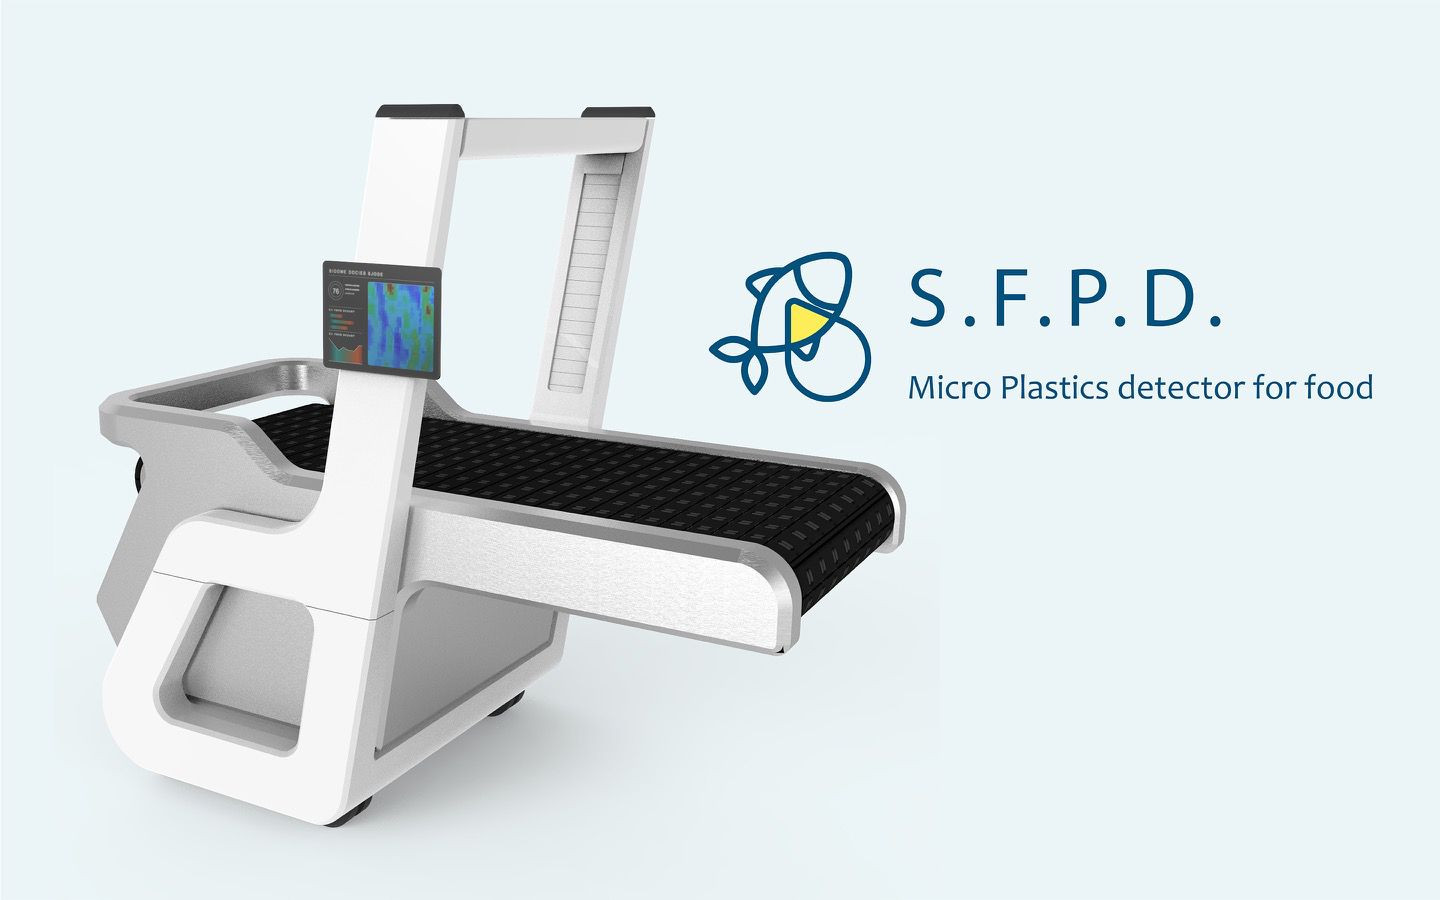 S.F.P.D. Micro plastics detect